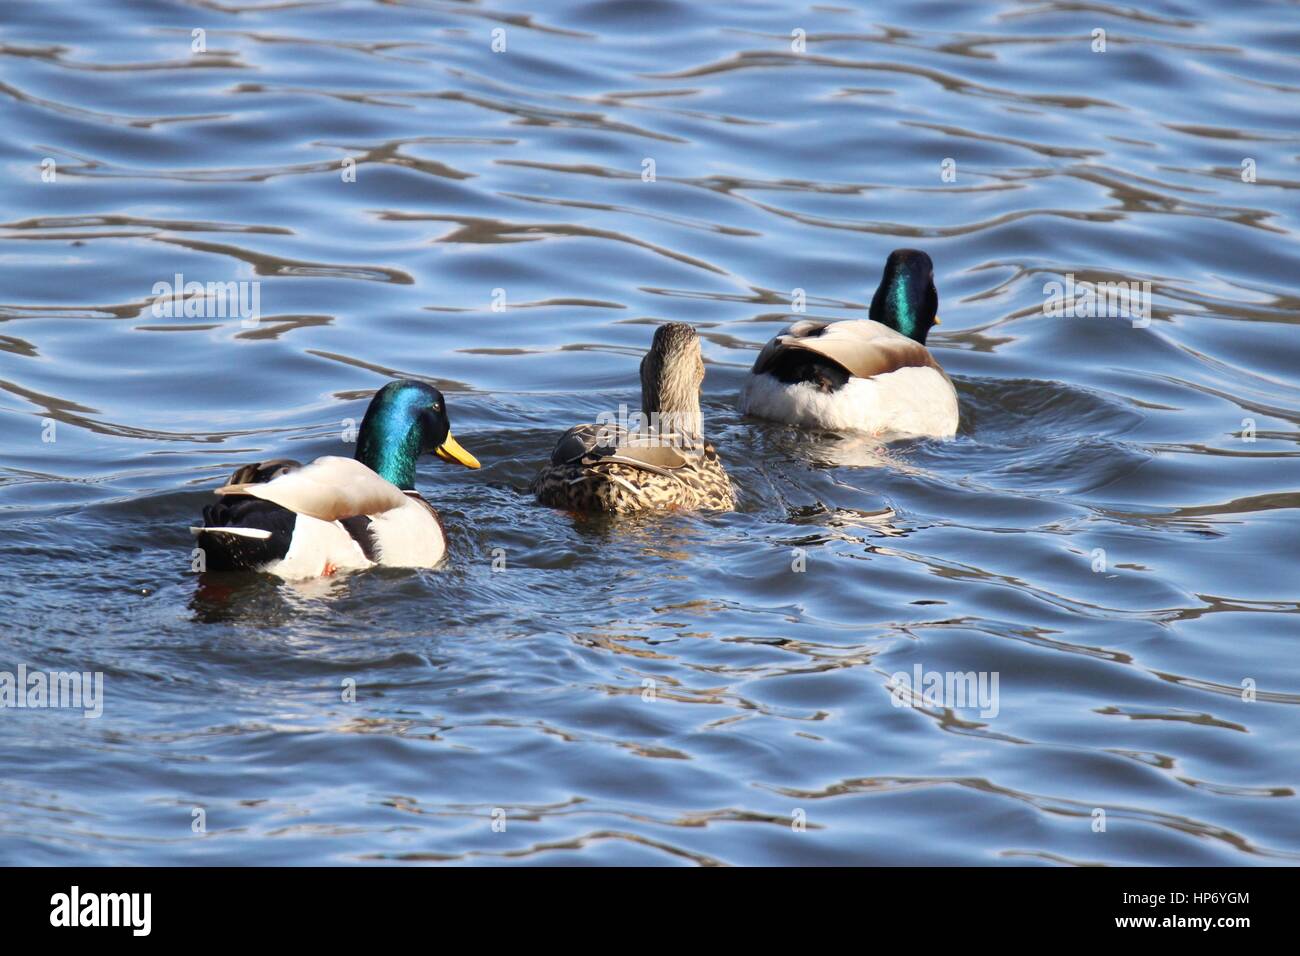 Three mallard ducks swimming together across a pond Stock Photo